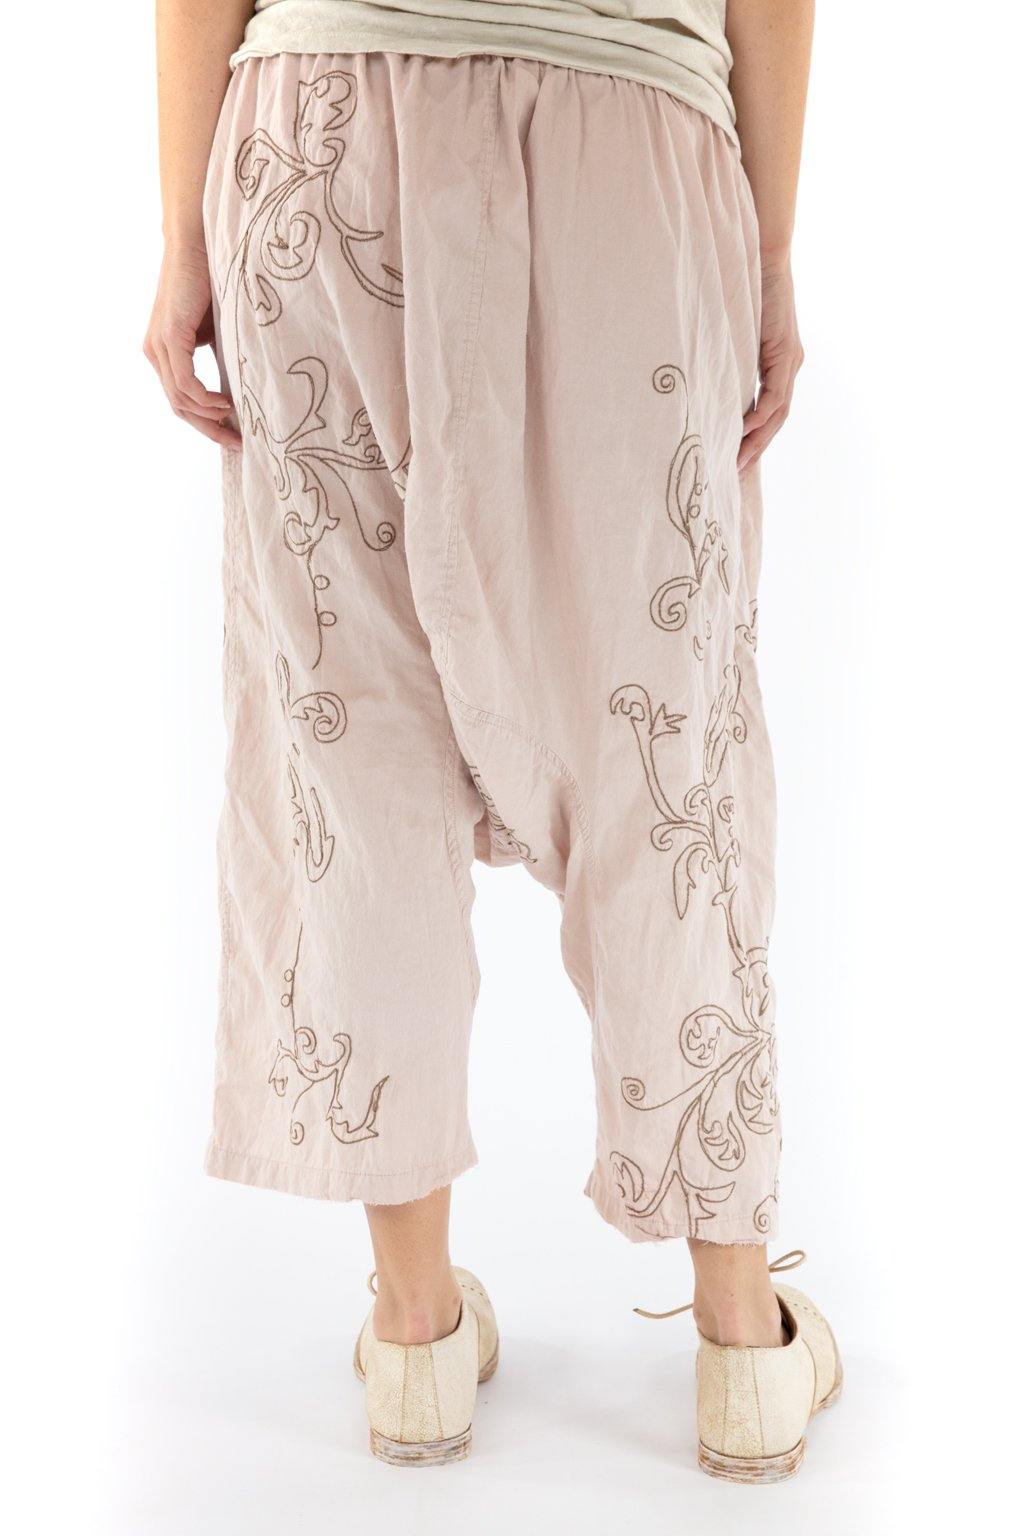 Dragon Garcon Trousers - Magnolia Pearl Clothing